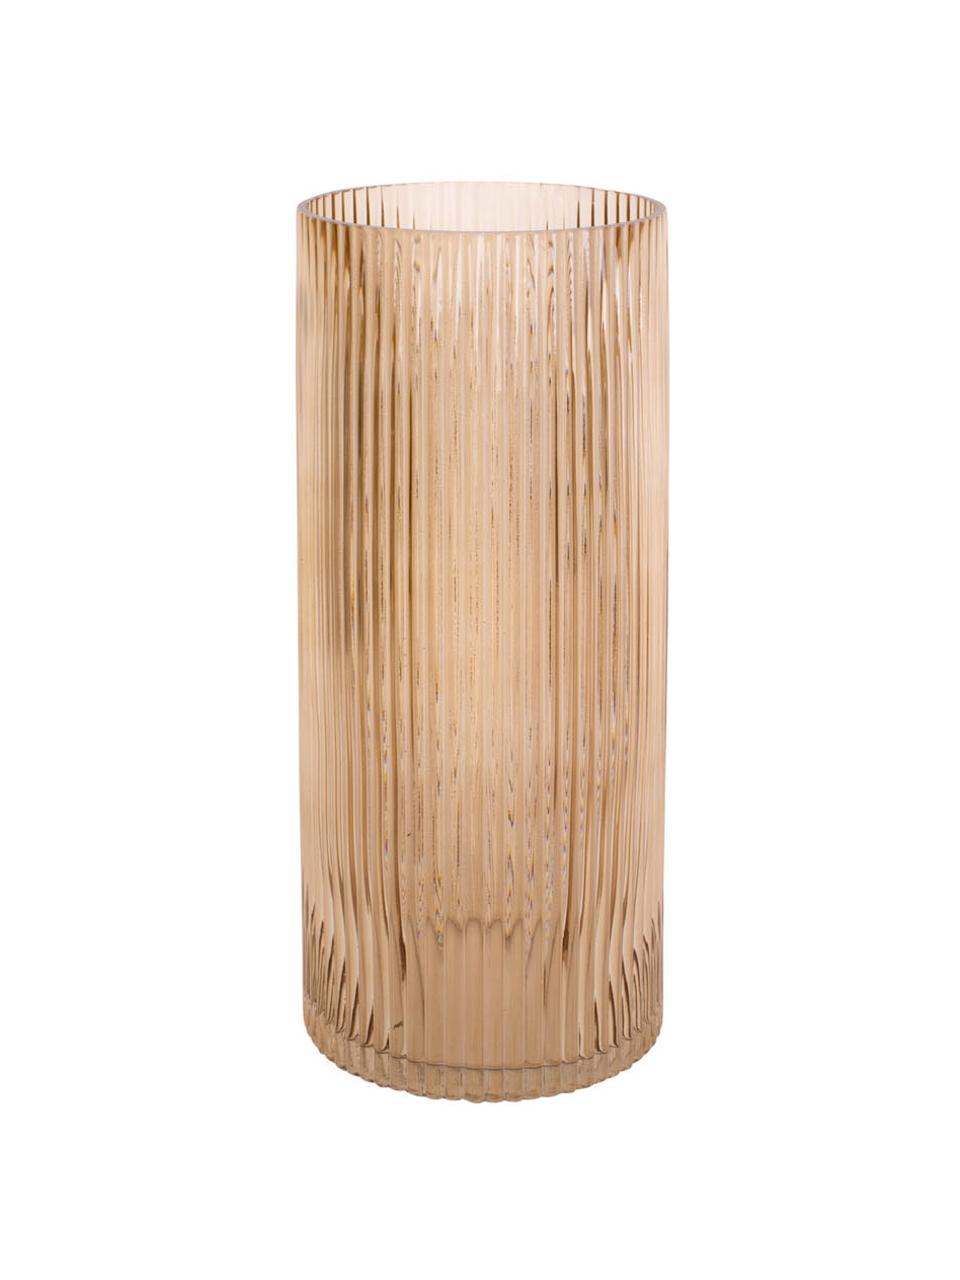 Große Glas-Vase Allure Straight in Hellbraun, Glas, getönt, Hellbraun, Ø 12 x H 30 cm